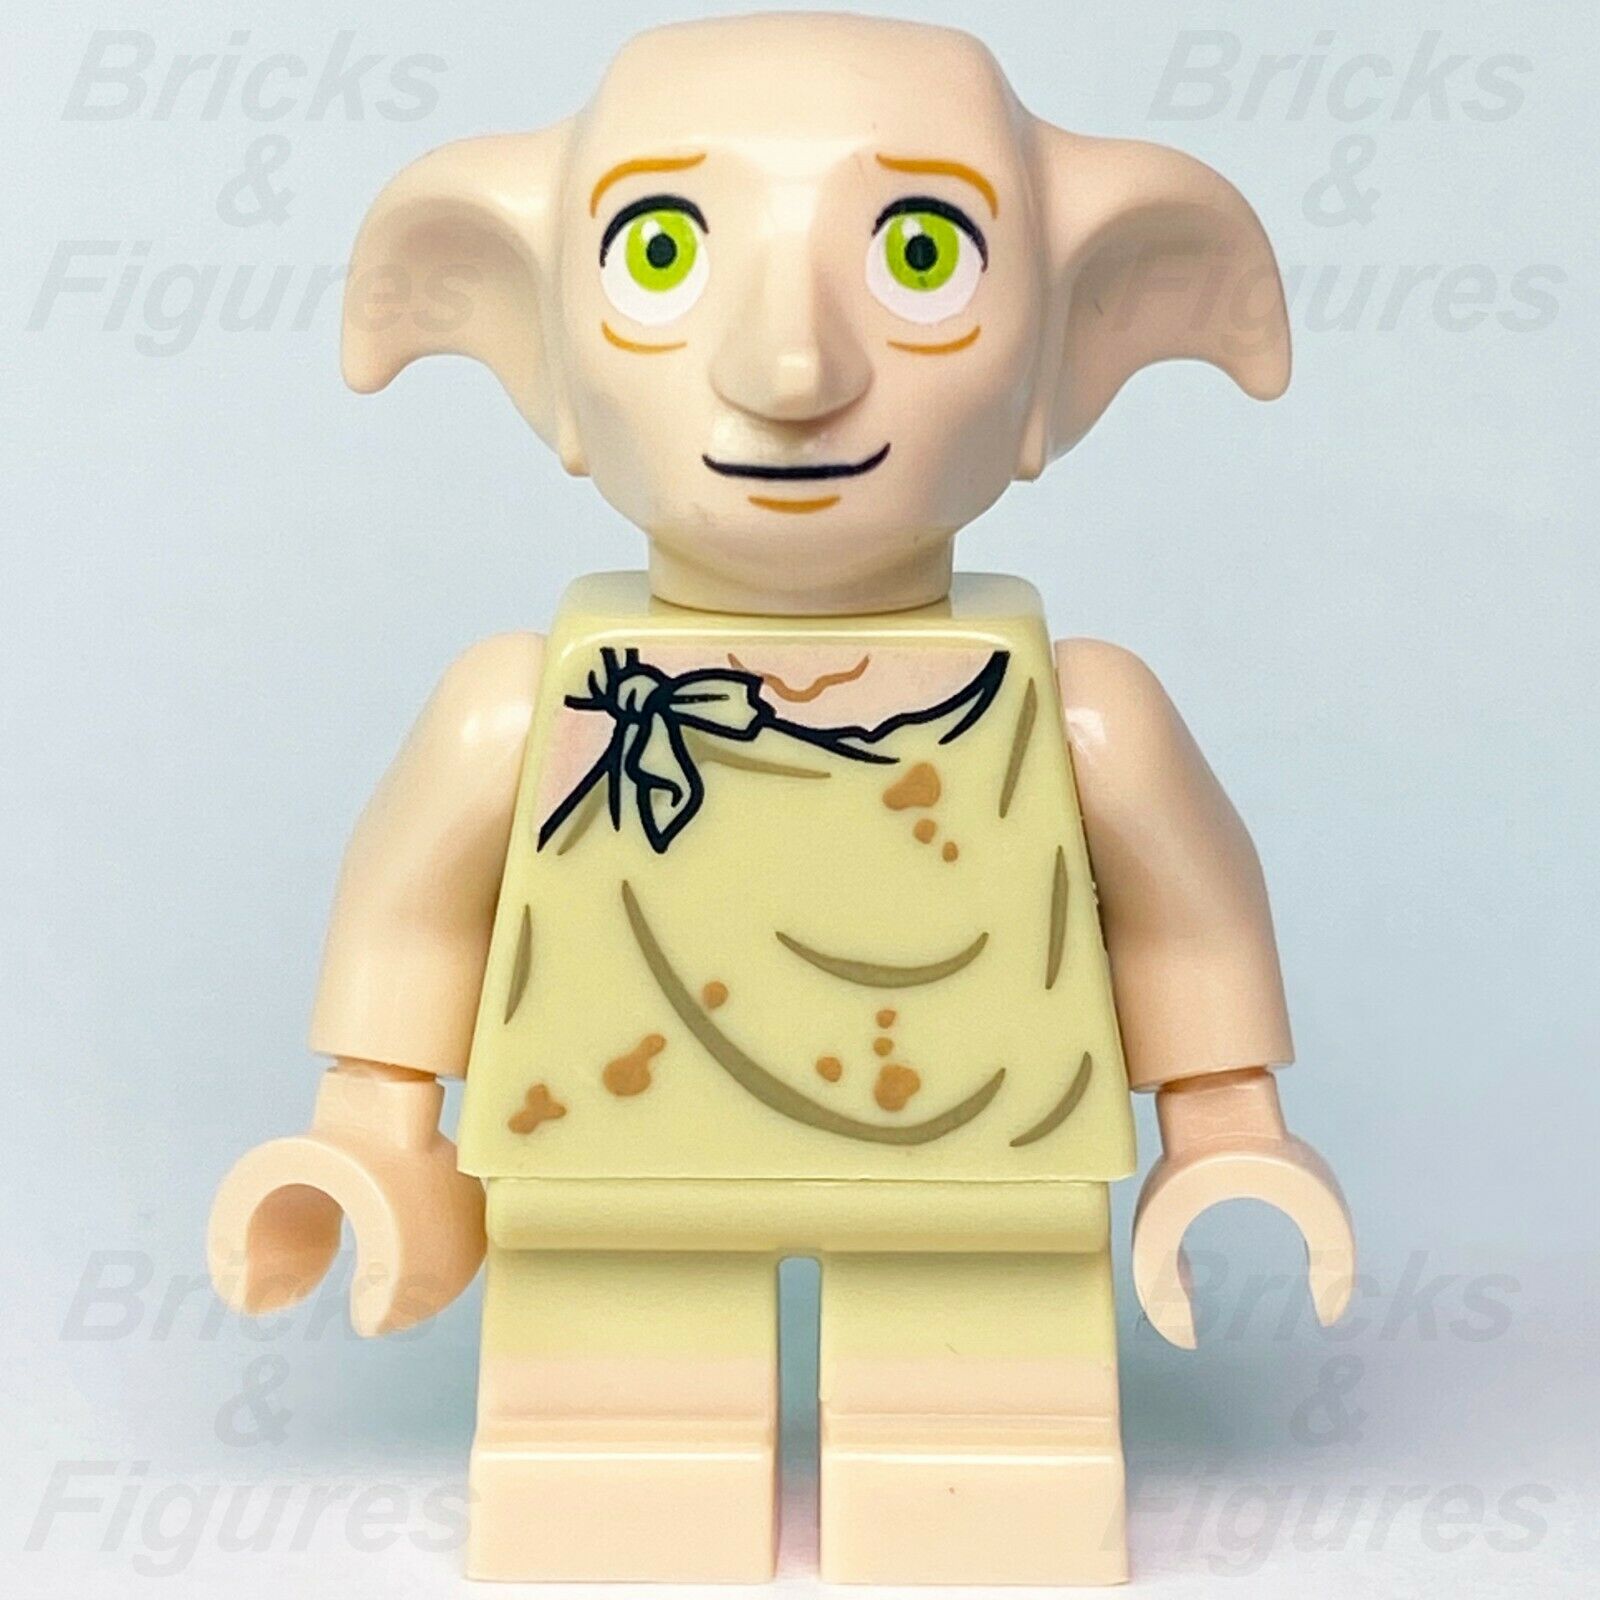 LEGO Harry Potter Series - Dobby - 71022